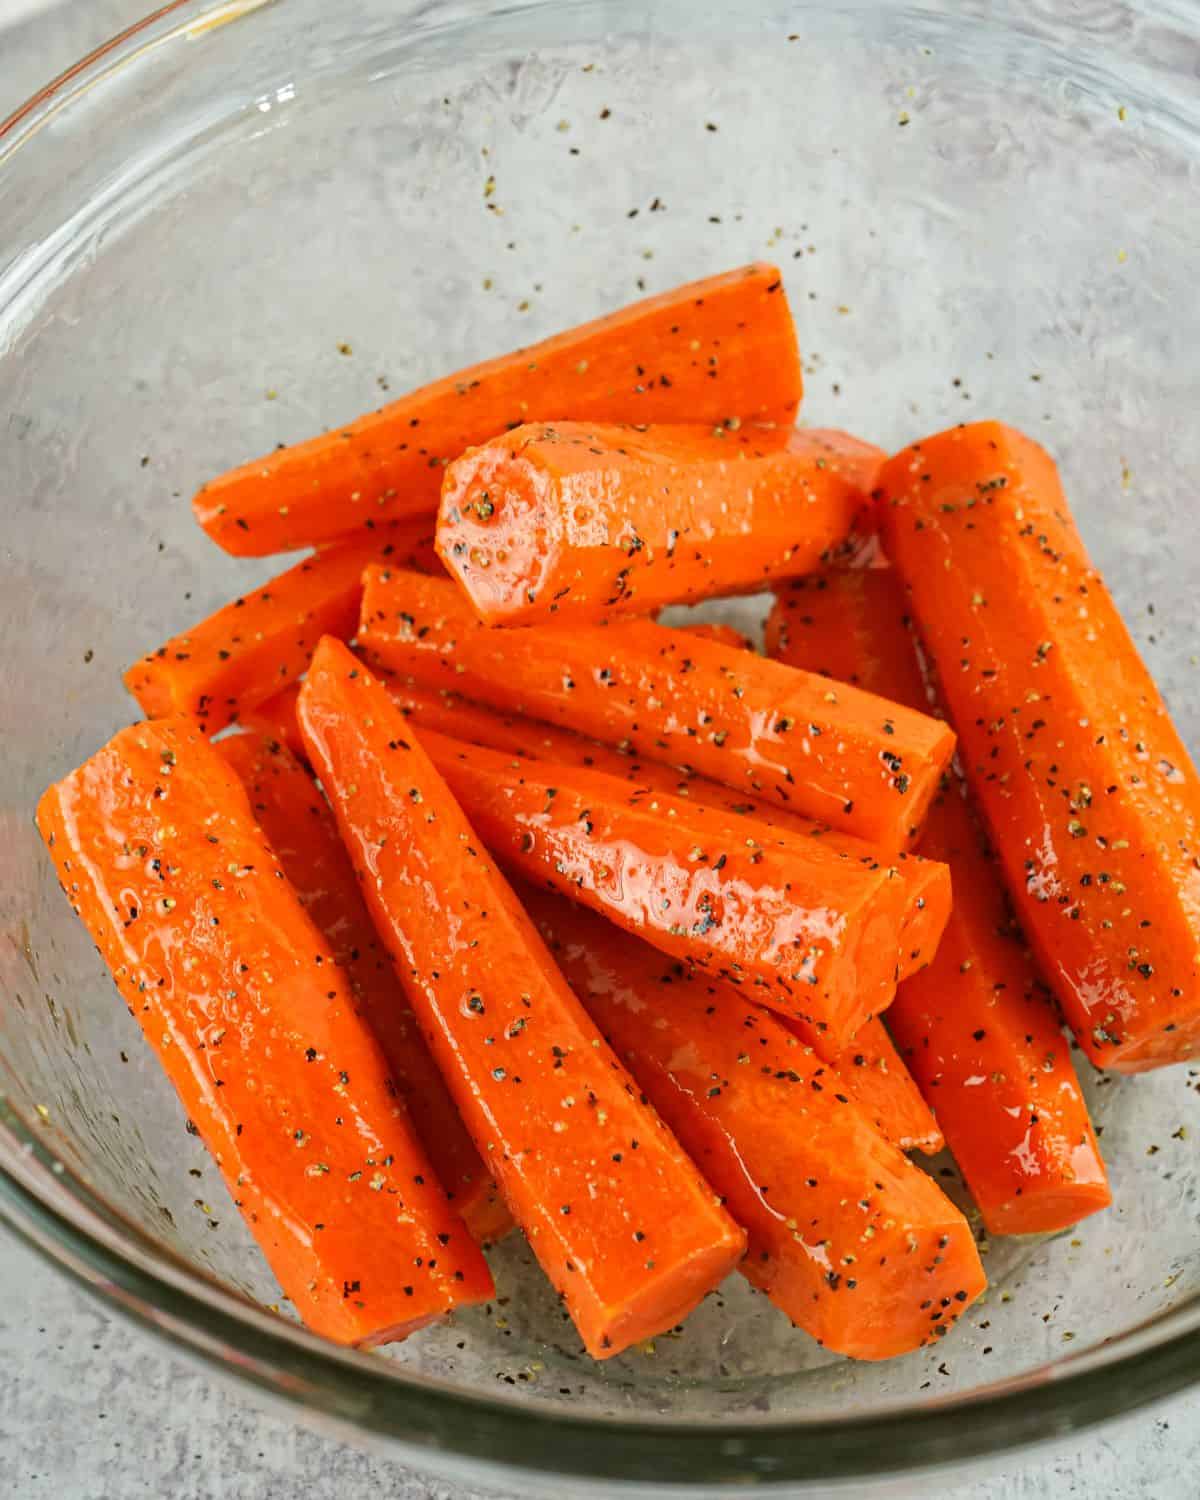 Carrots seasoned with salt, black pepper, and olive oil.